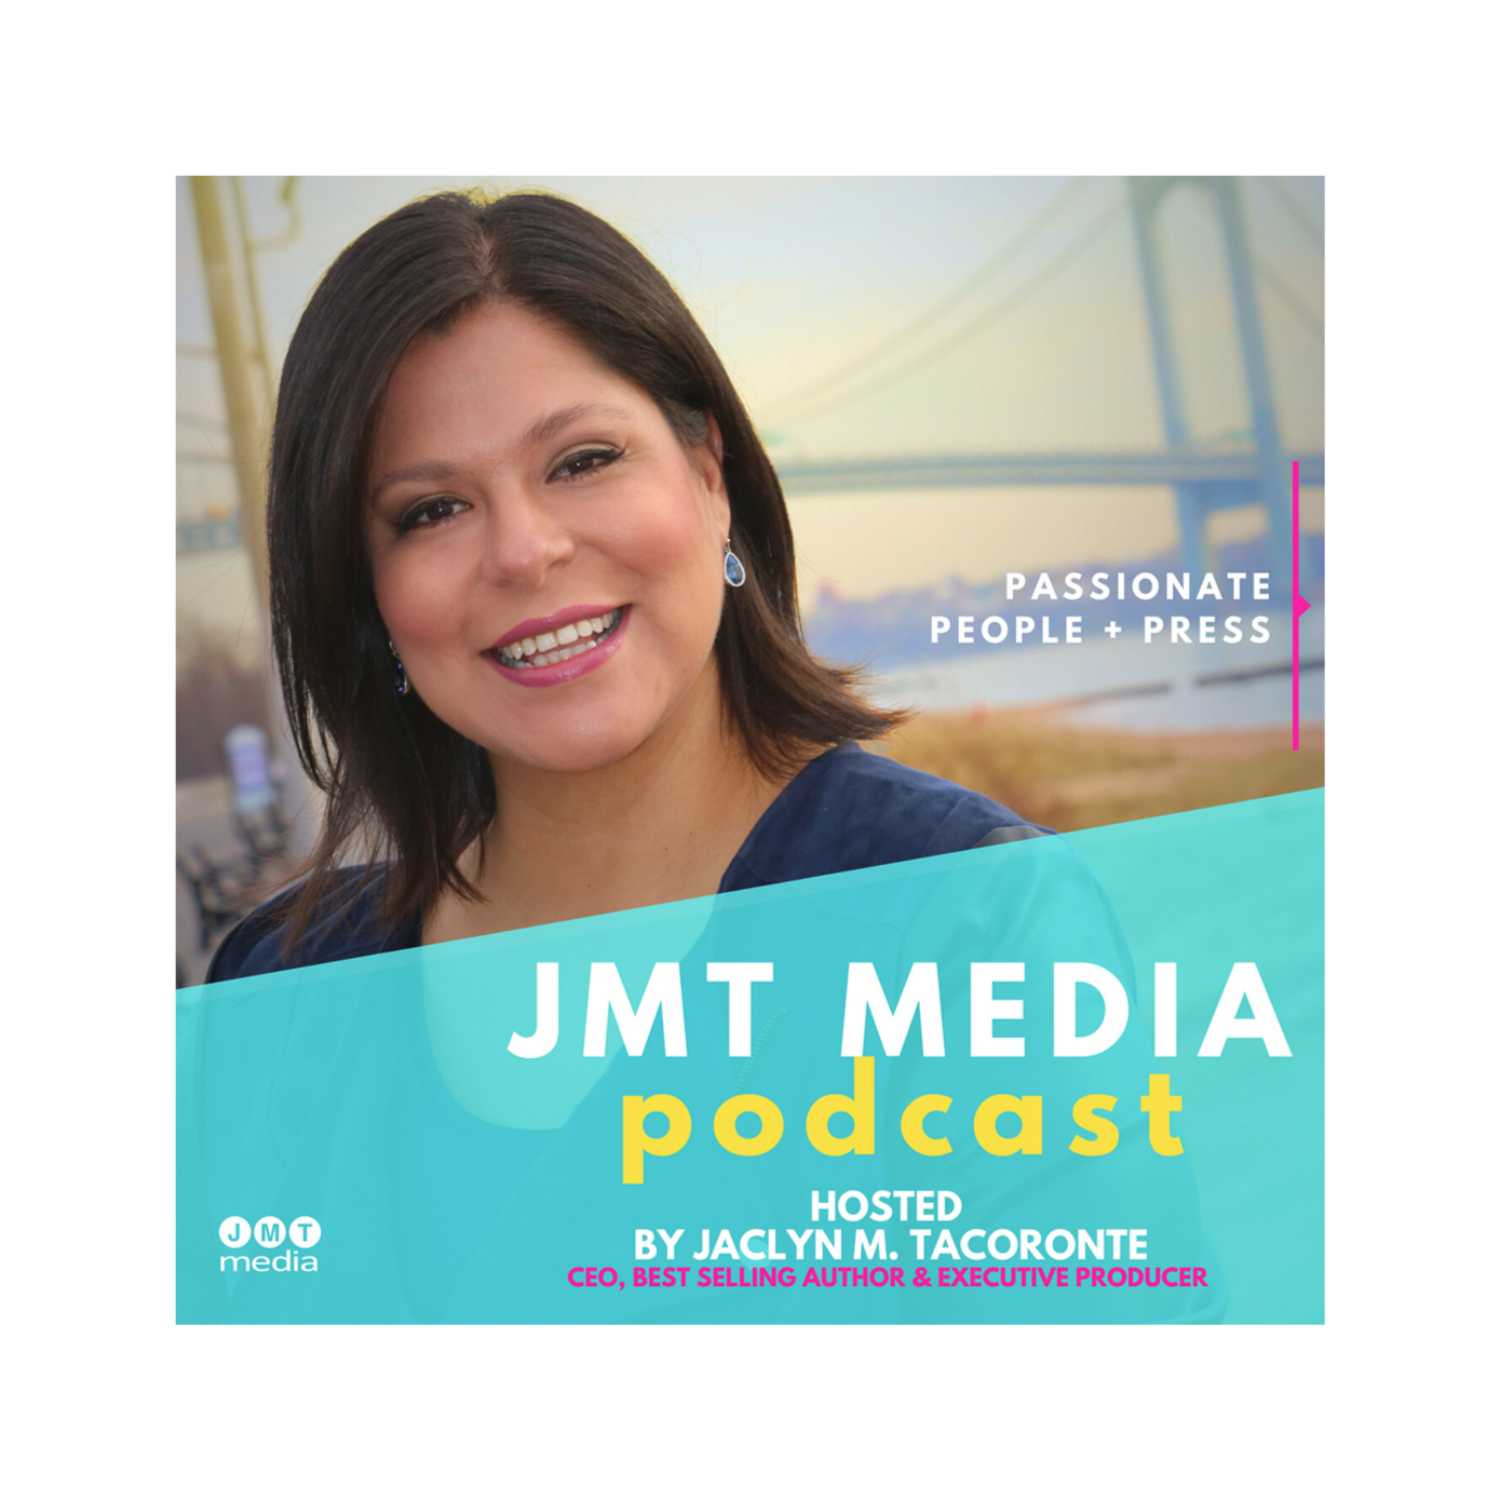 JMT Media Podcast | Season 3 Episode 14 With Tim Kennedy